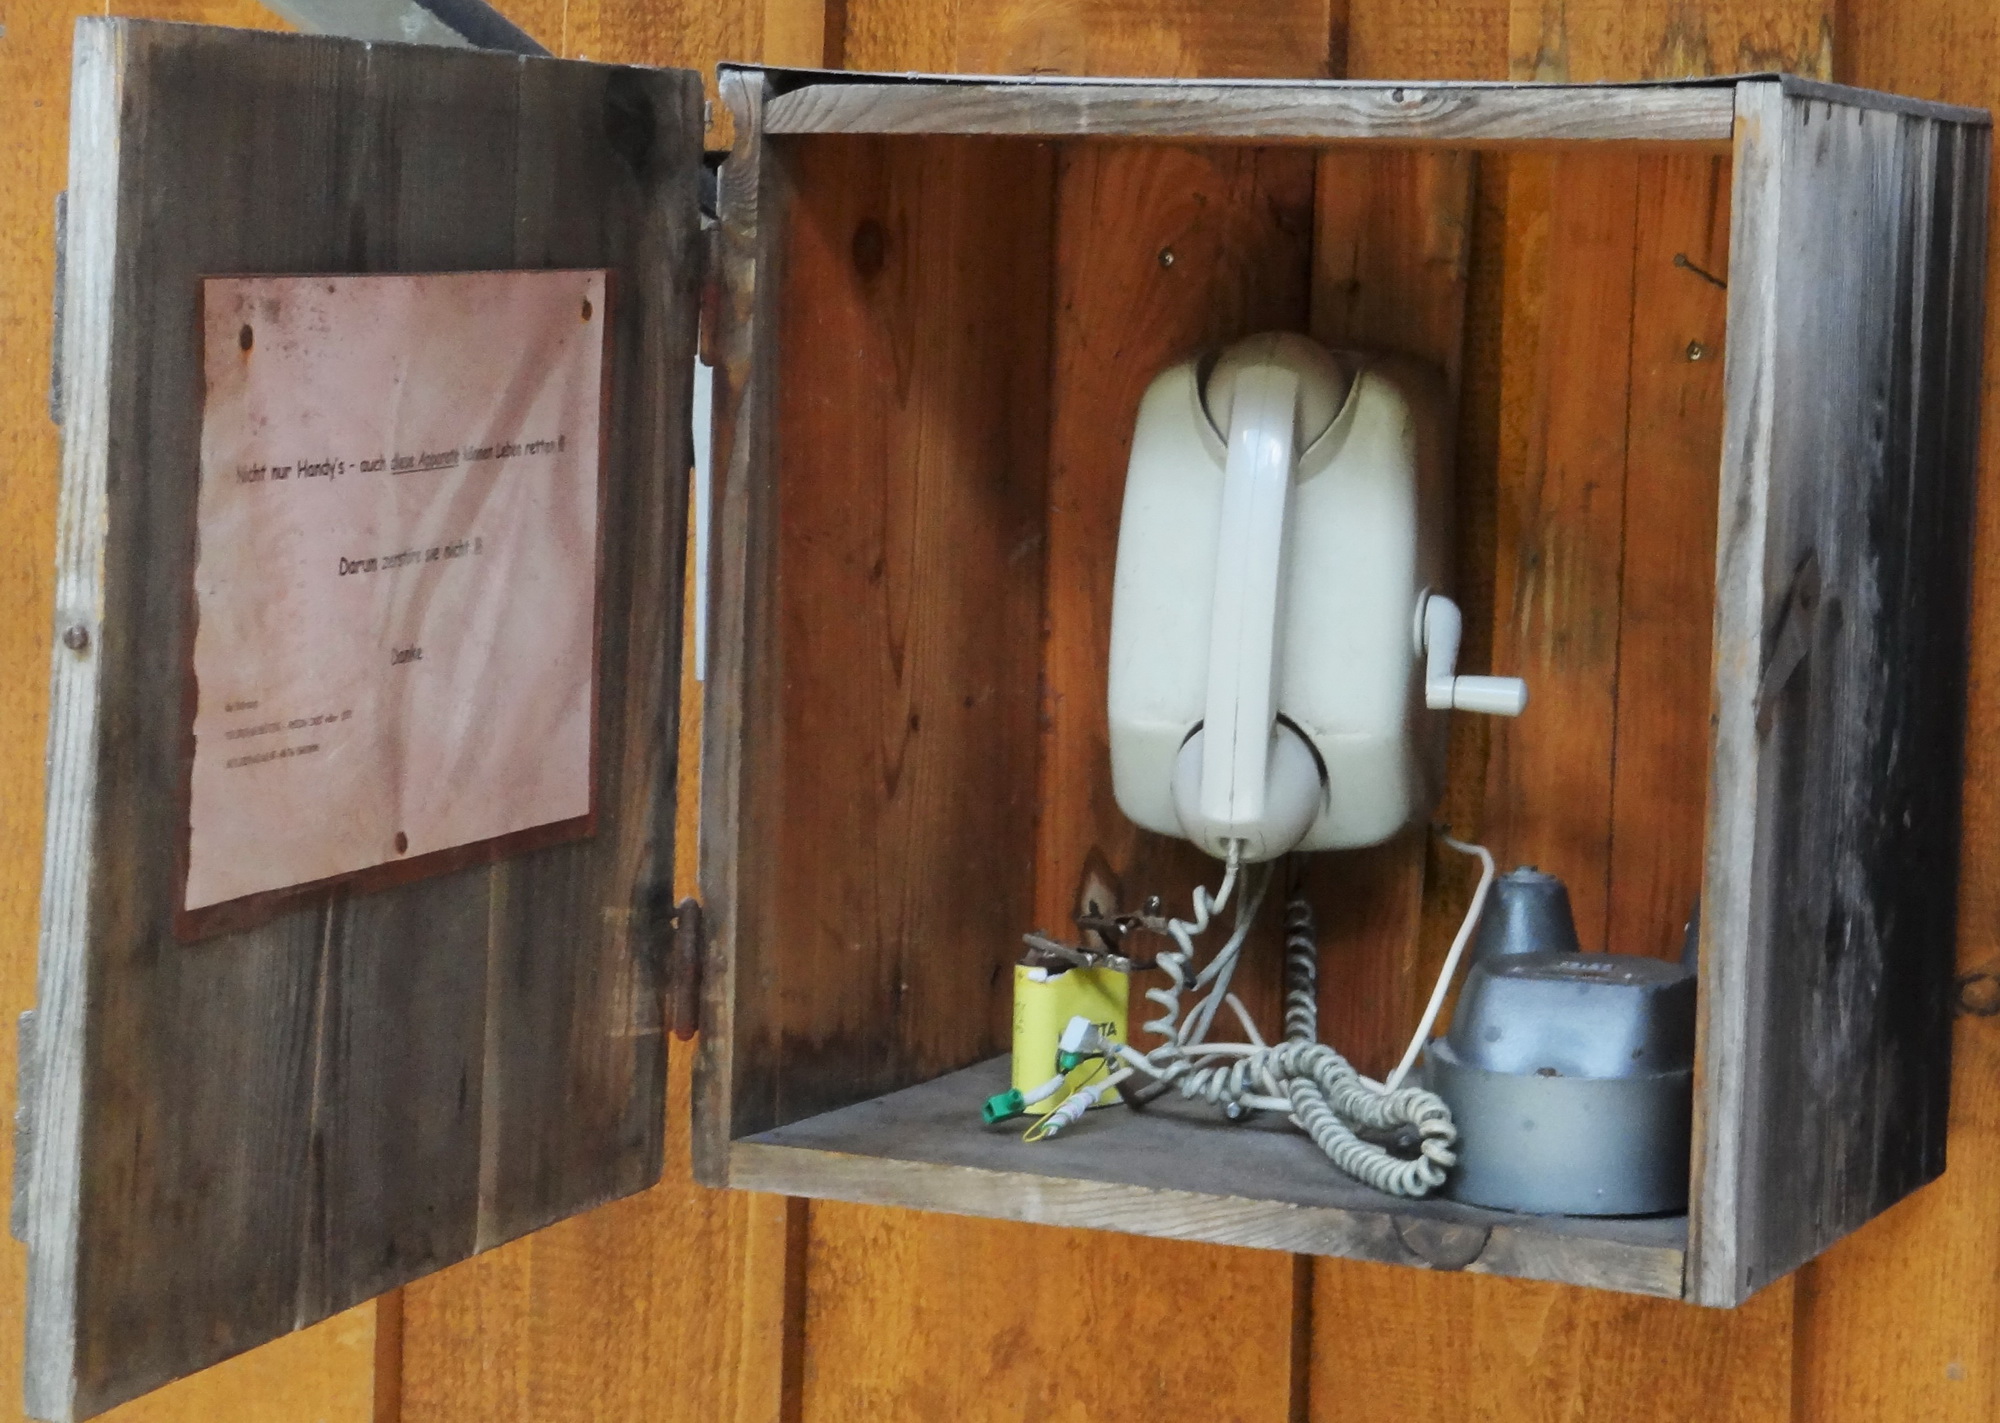 Sulzenau hut telephone